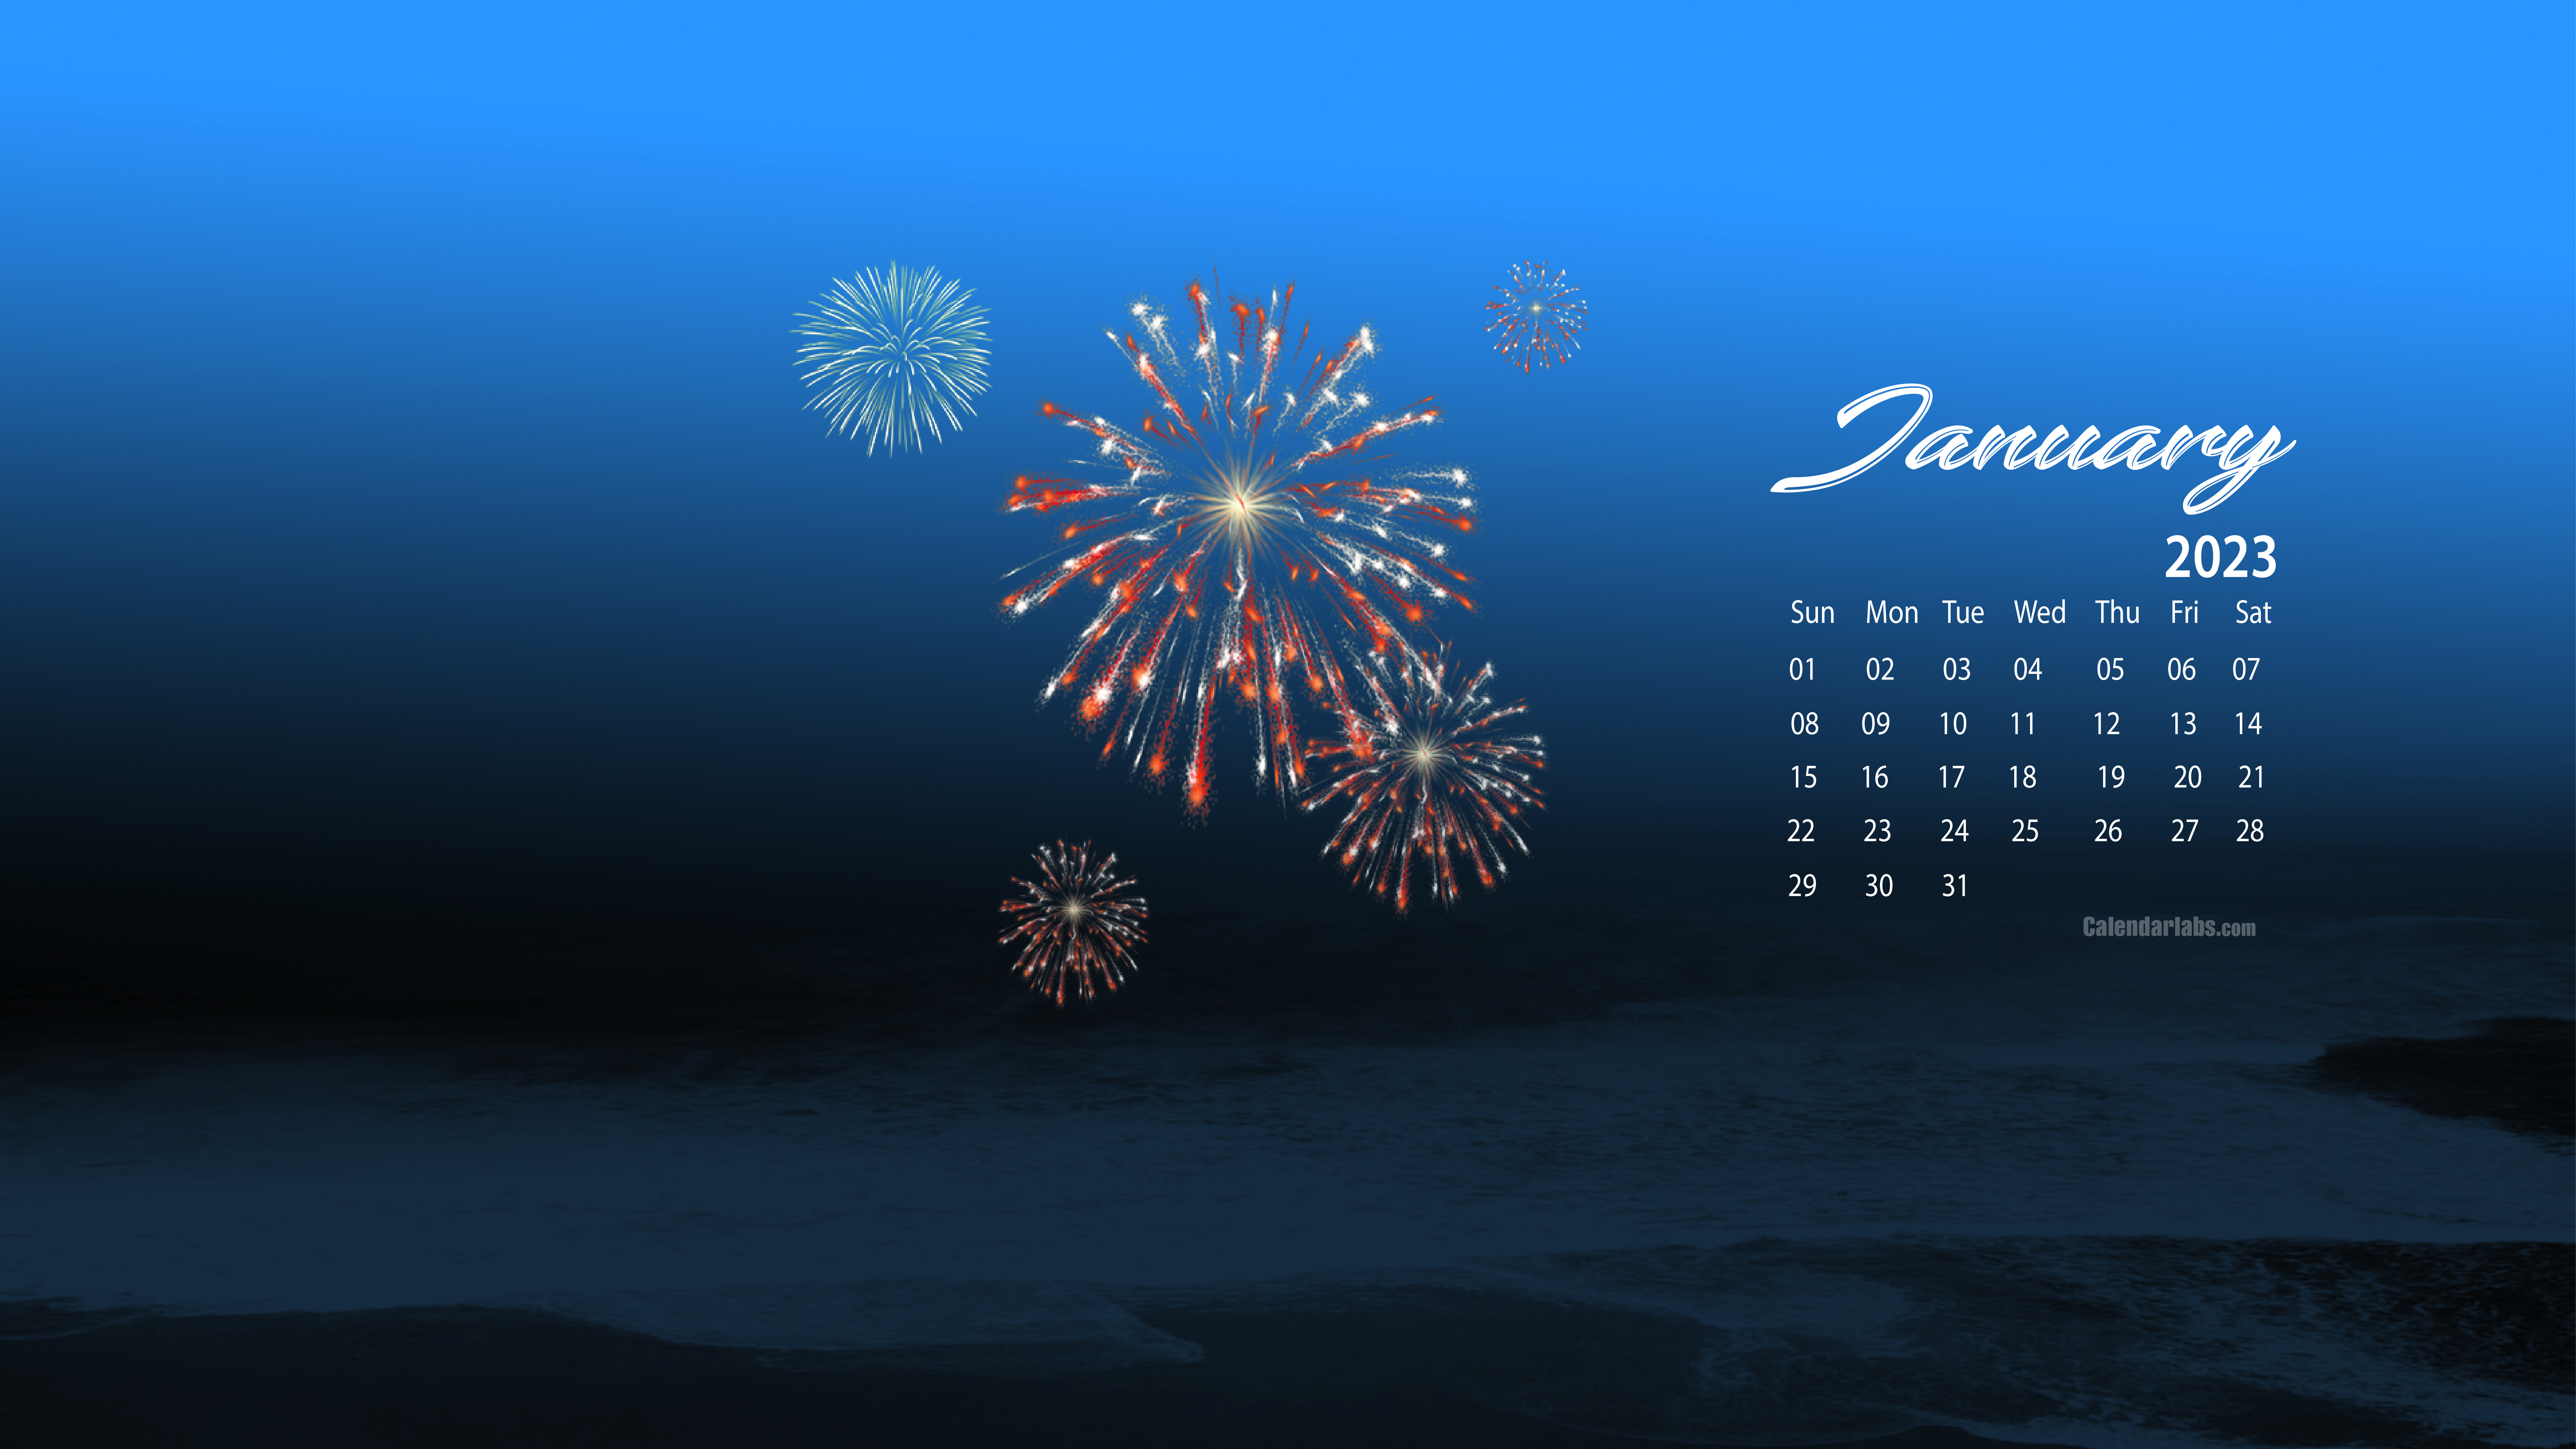 January 2023 Desktop Wallpaper Calendar